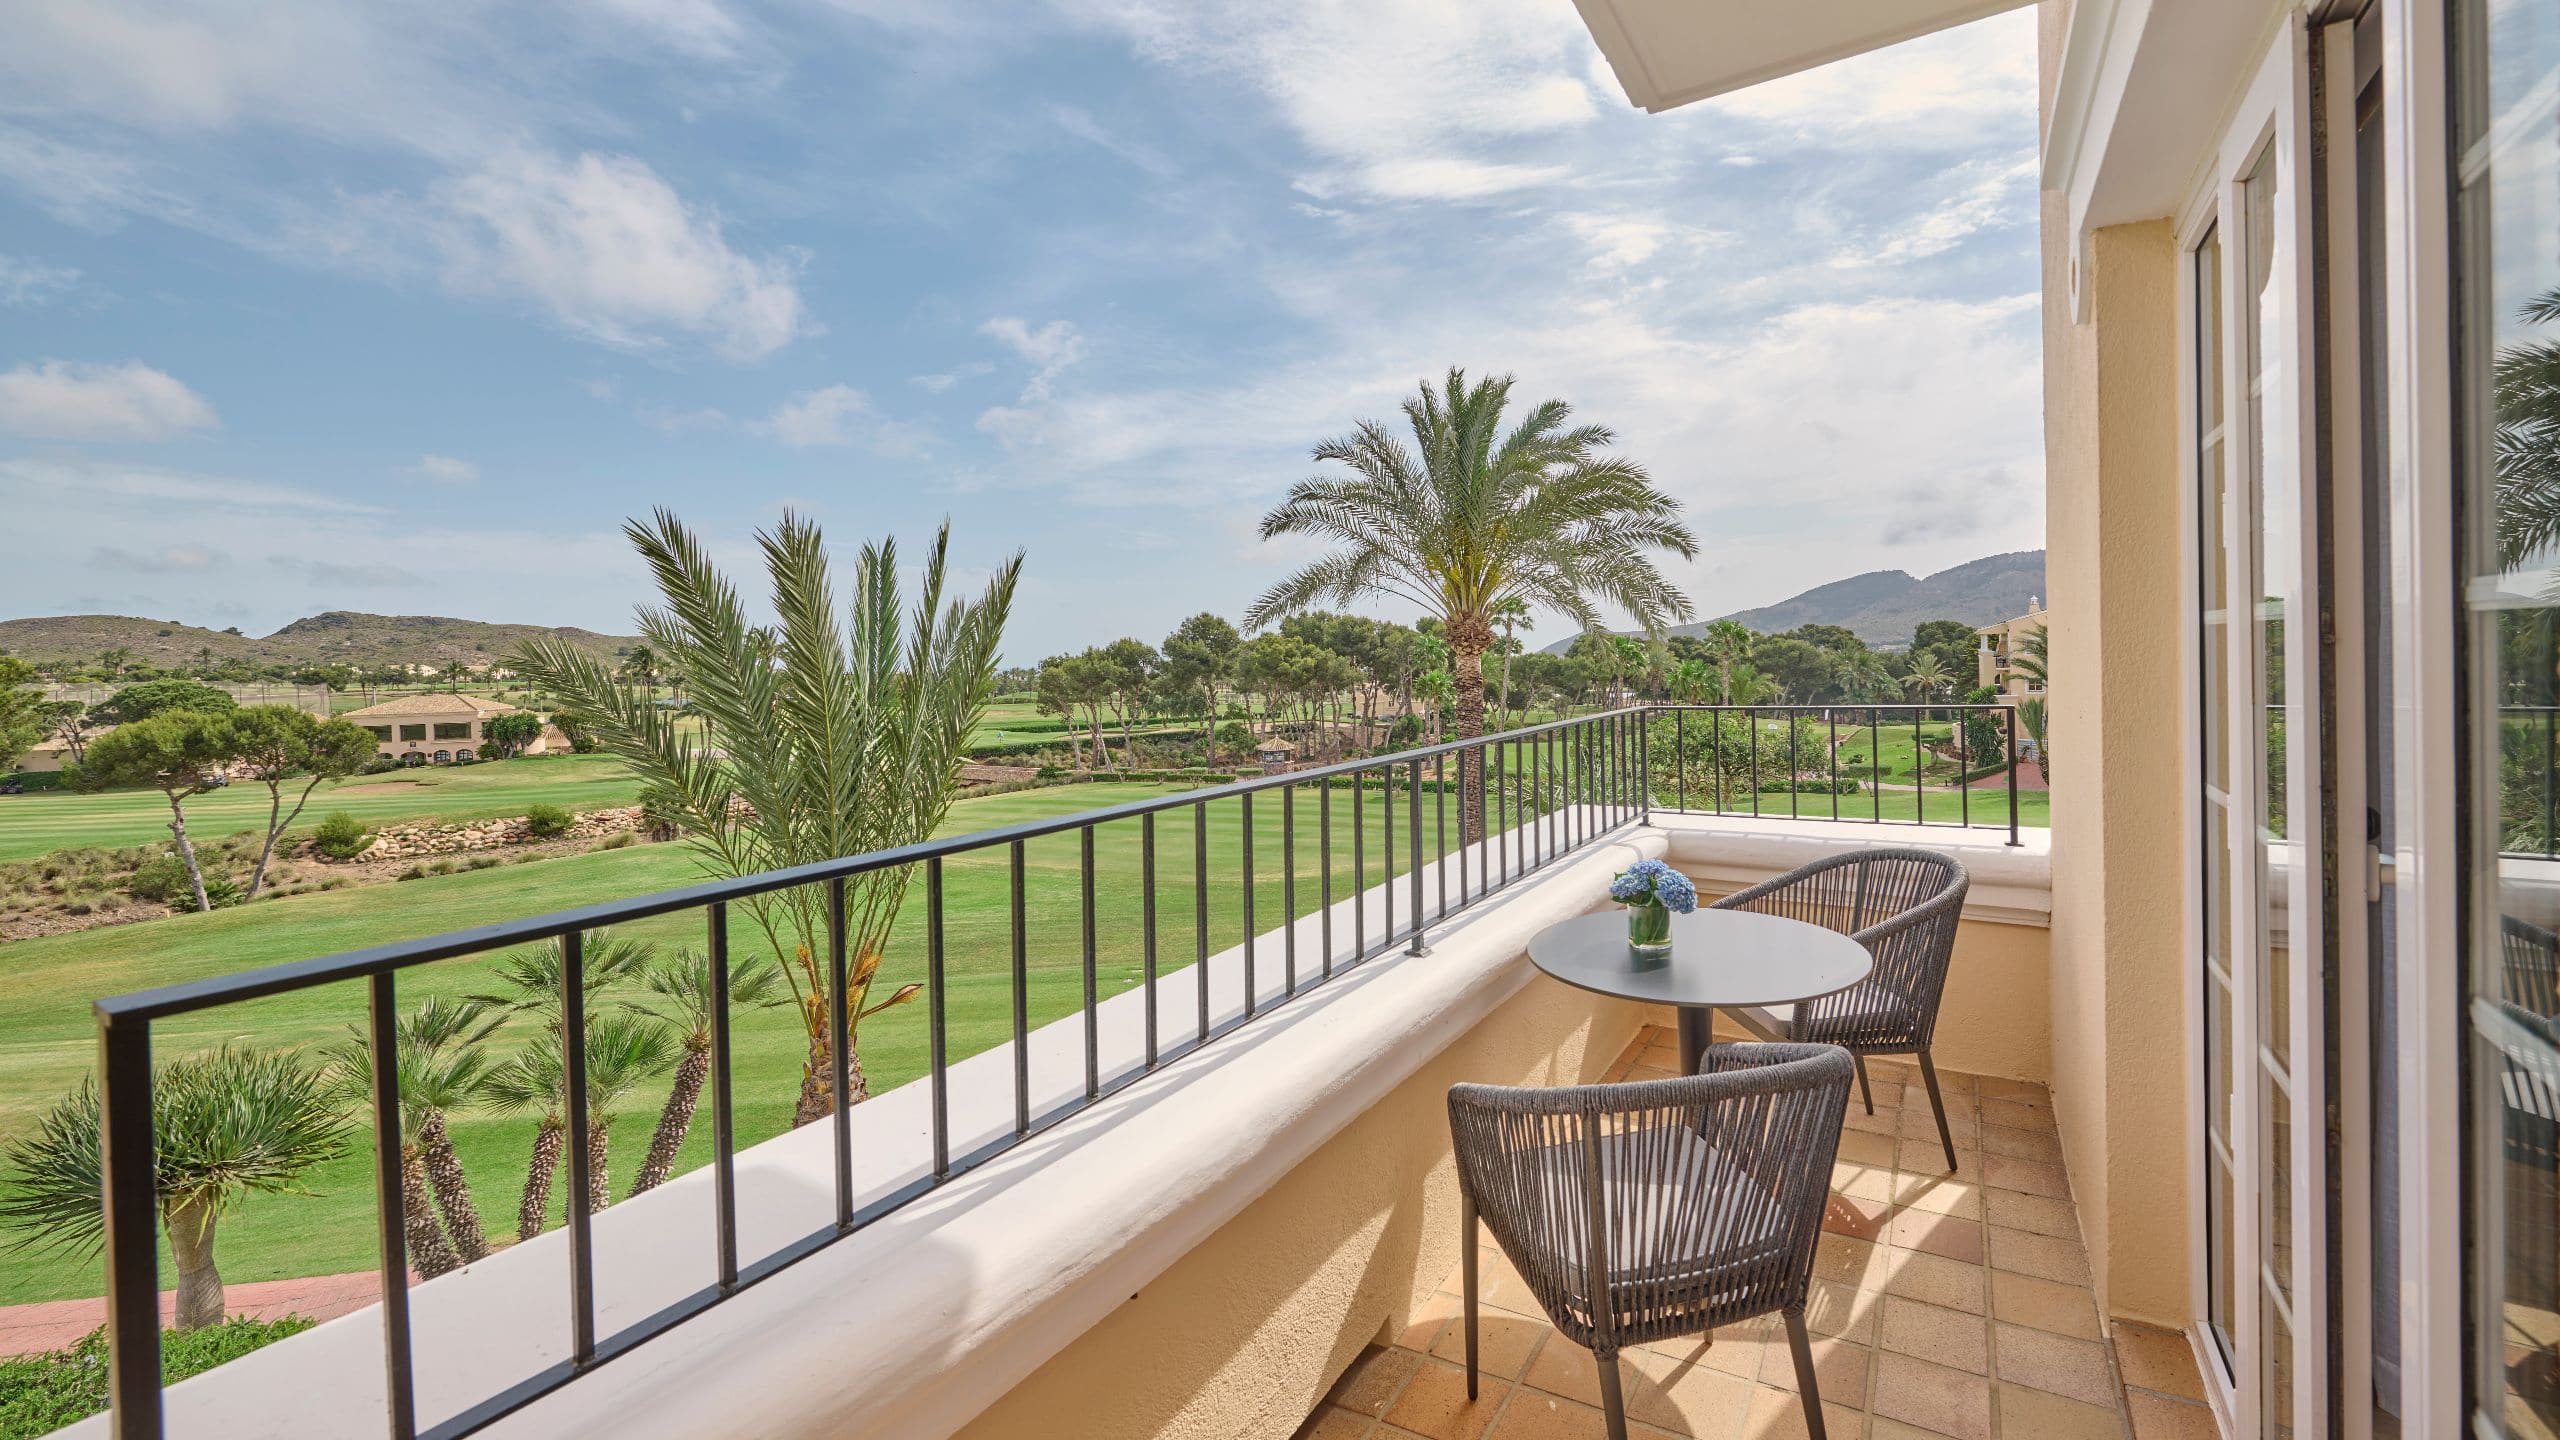 Grand Hyatt La Manga Club Golf & Spa Guestroom Balcony